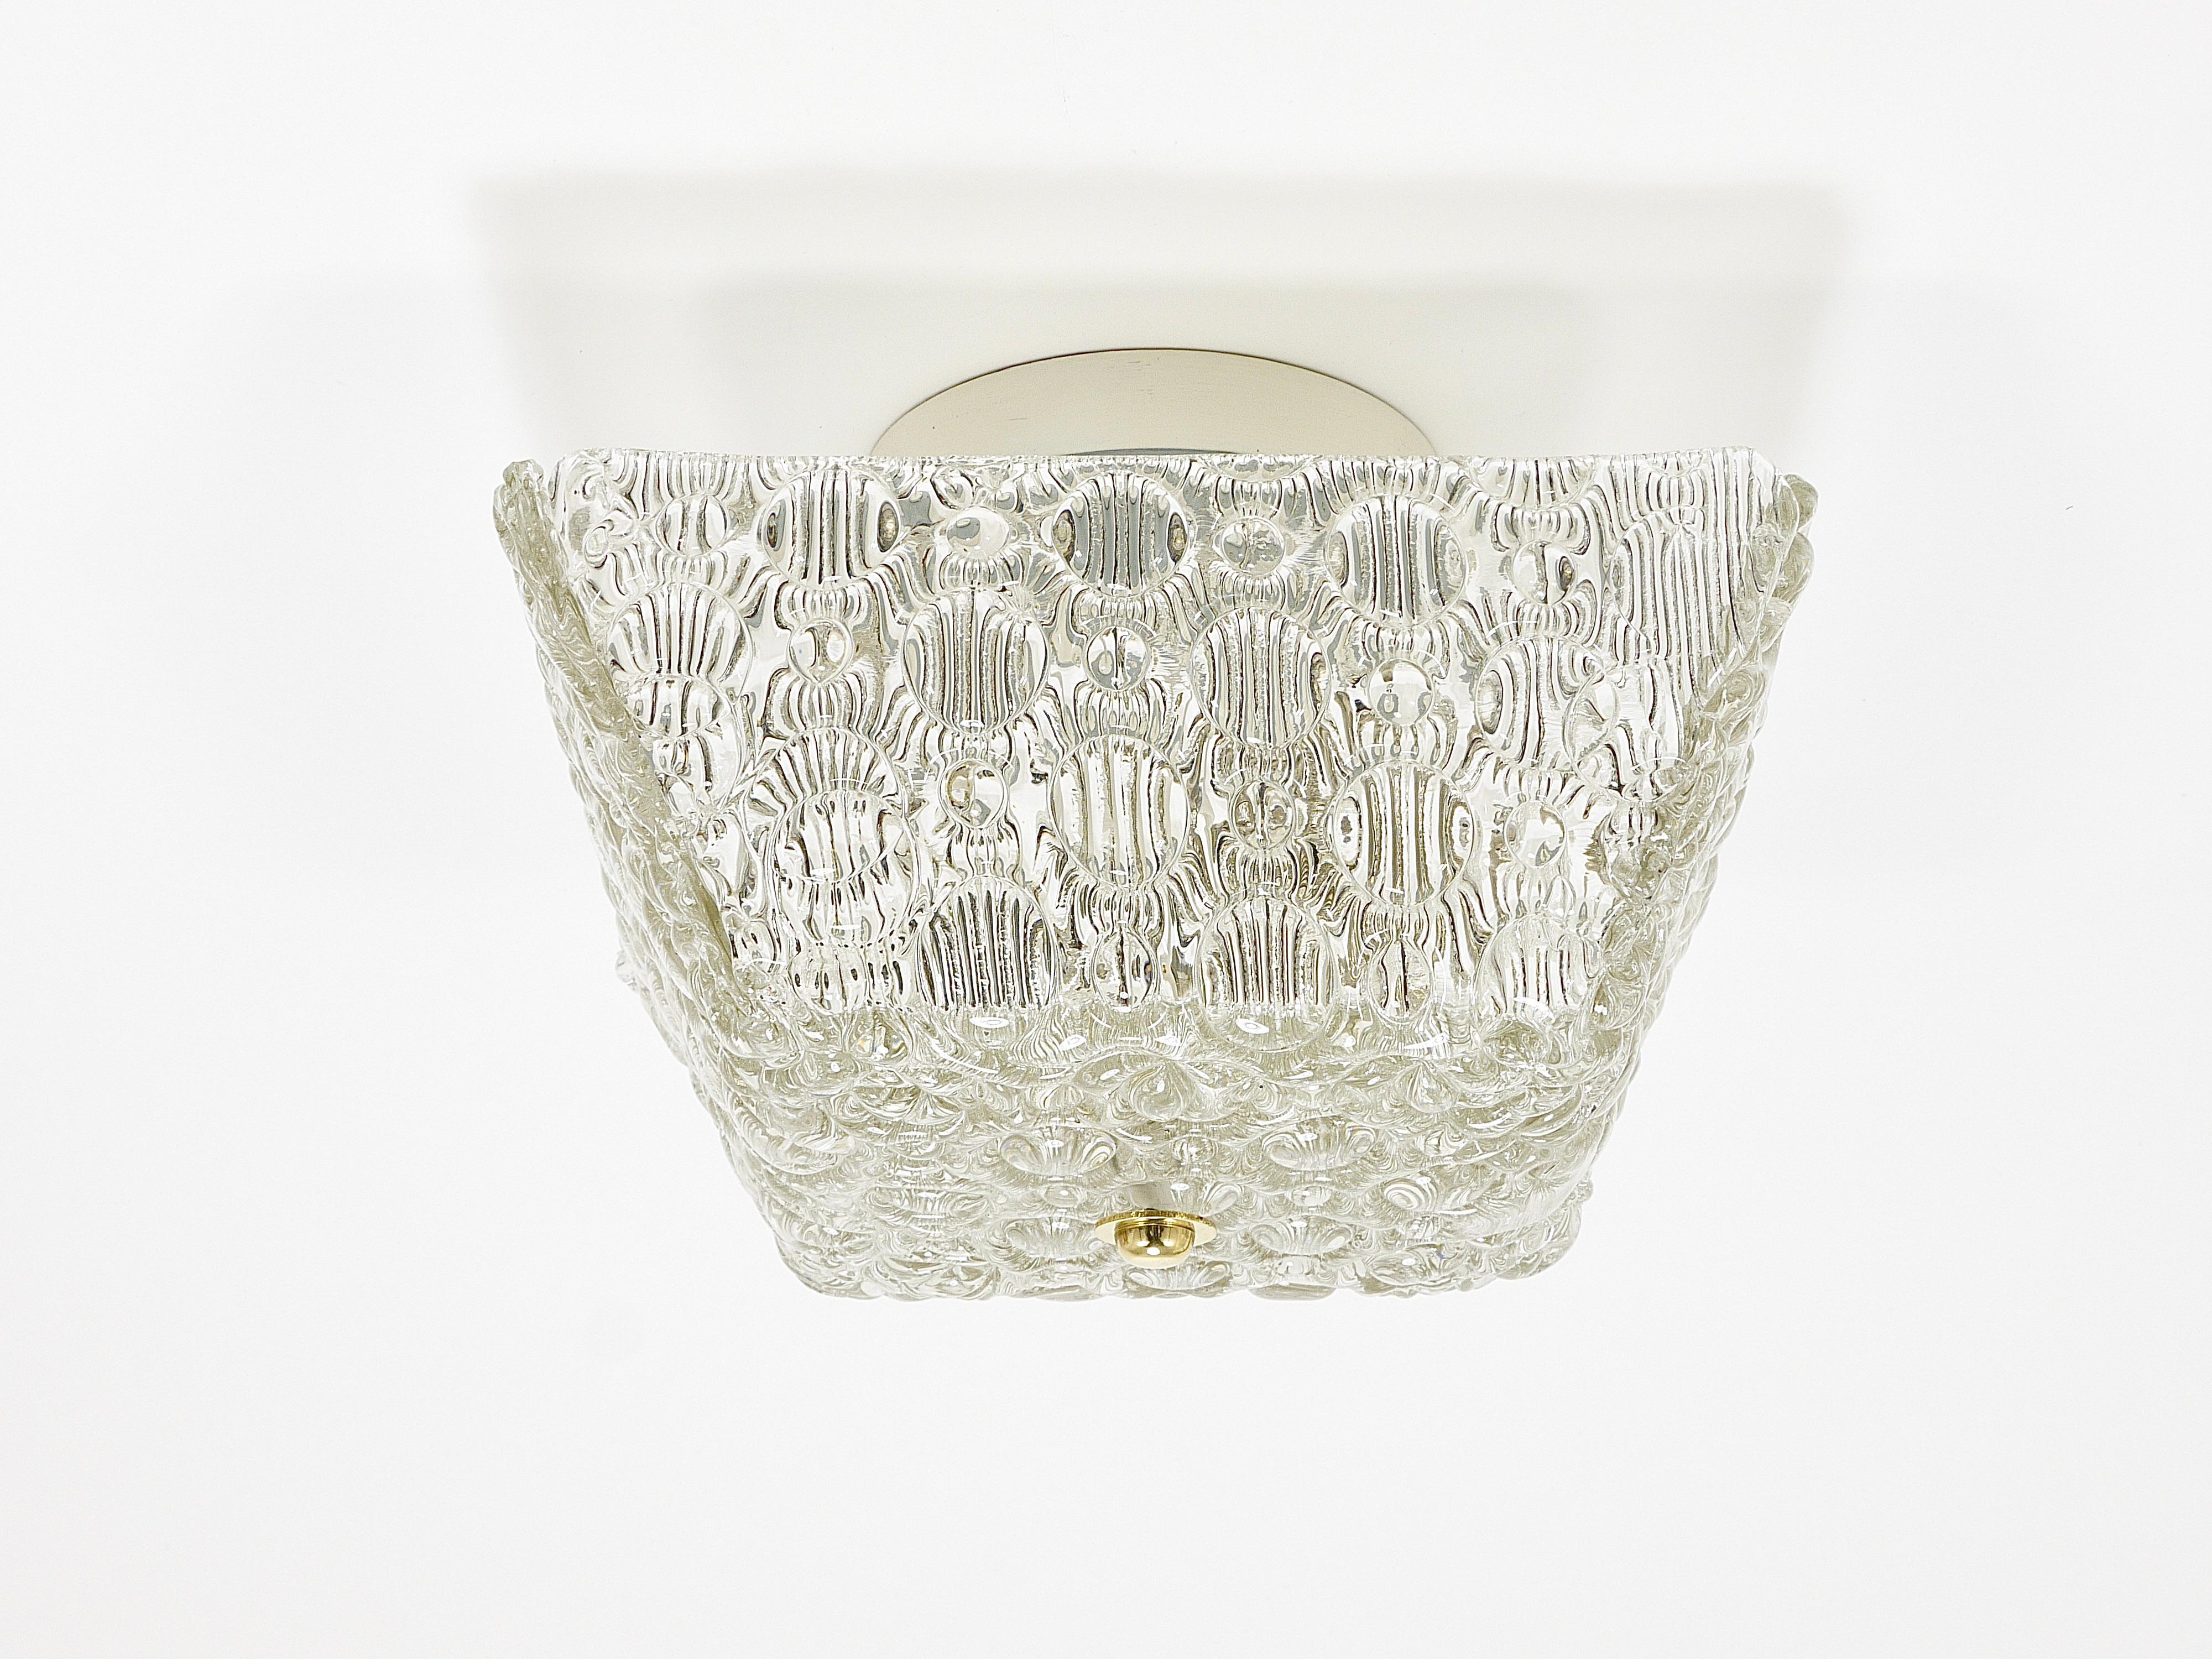 J.T Kalmar Square Brass & Textured Glass Flush Mount Ceiling Light, 1950s For Sale 4